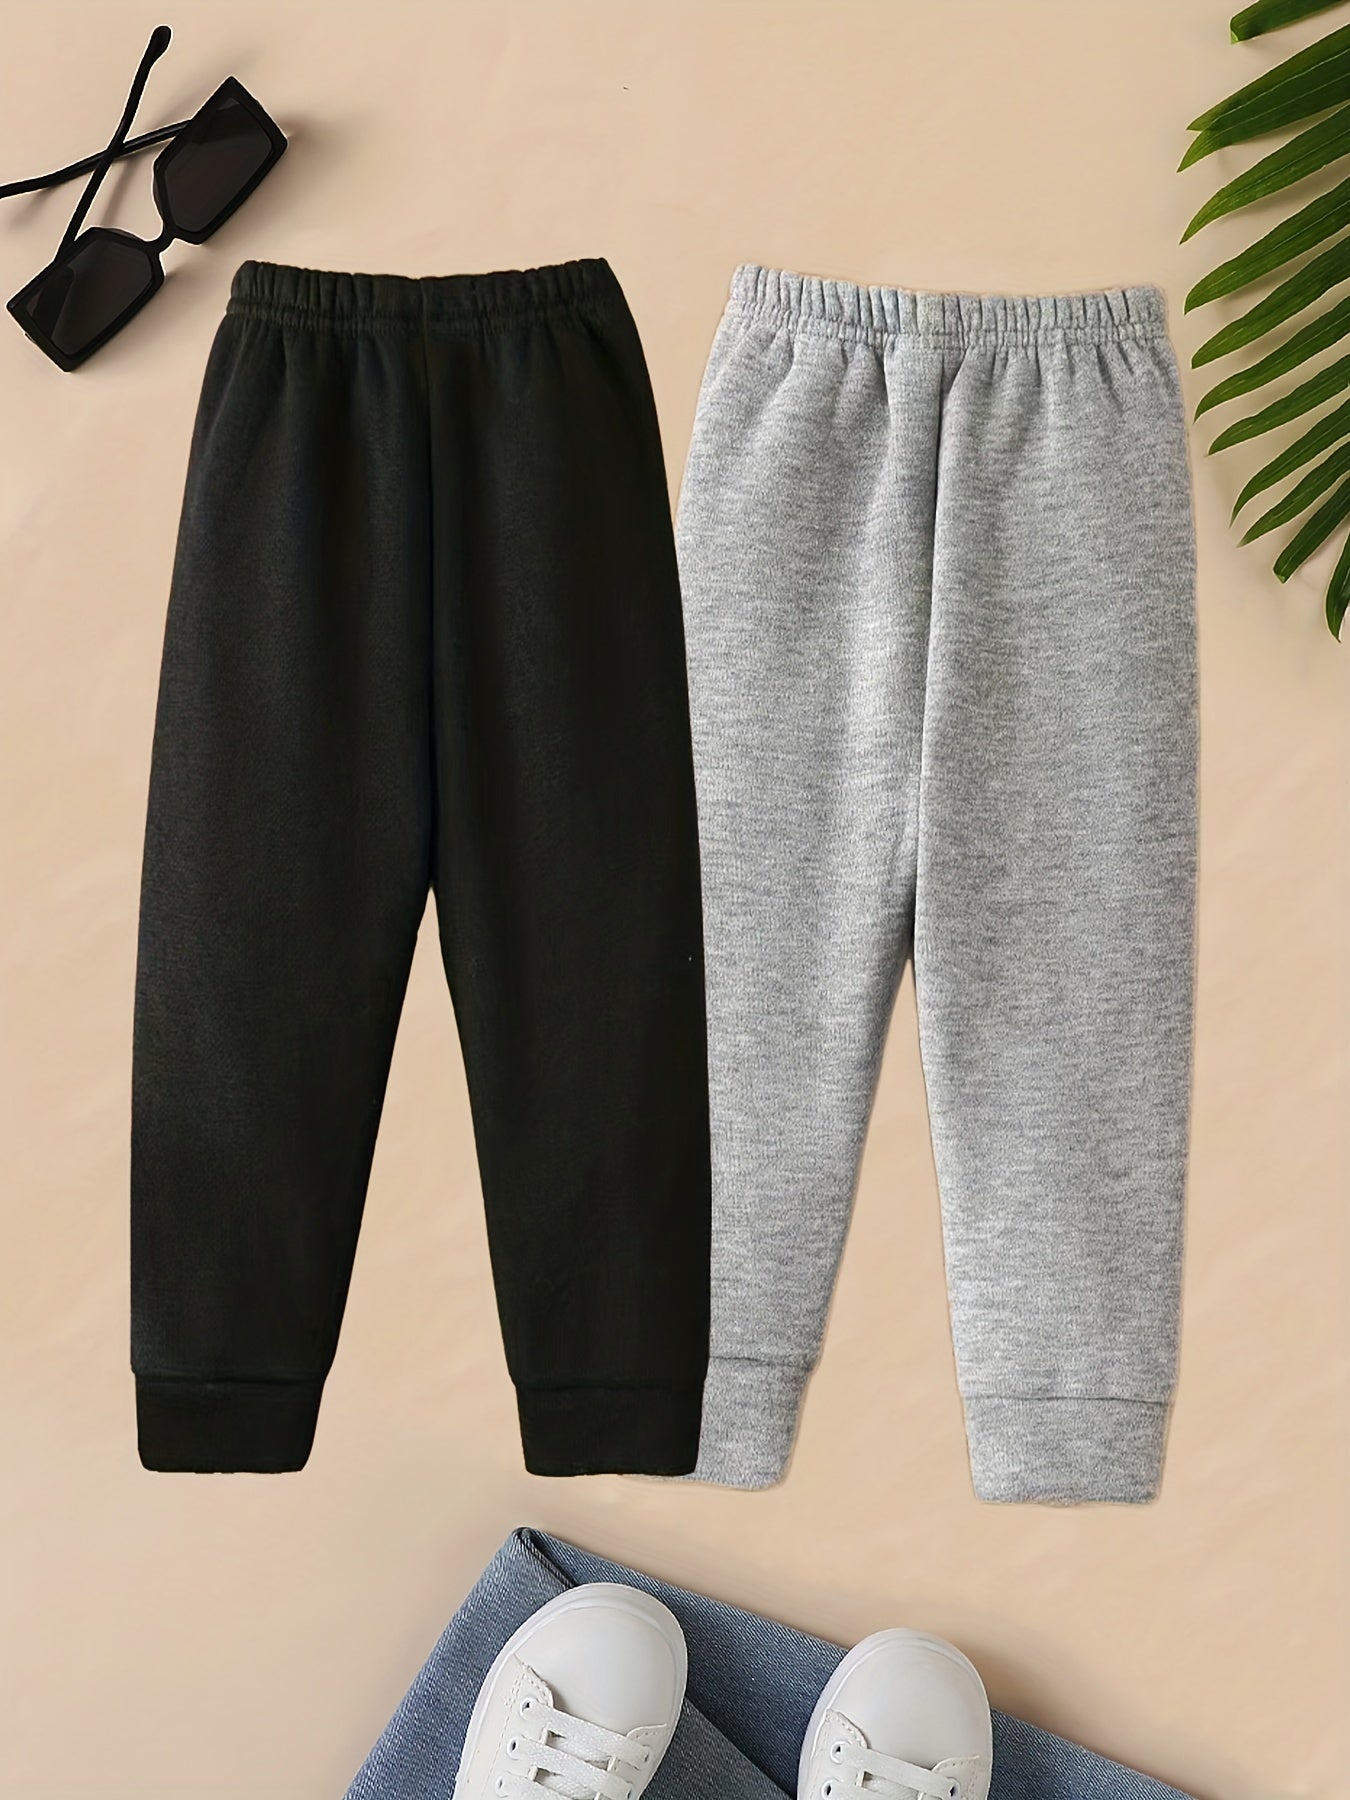 Boys Alphabets Print Sweatpants Elastic Waist Fake Drawstring Sport Jogger Pants Kids Summer Clothes